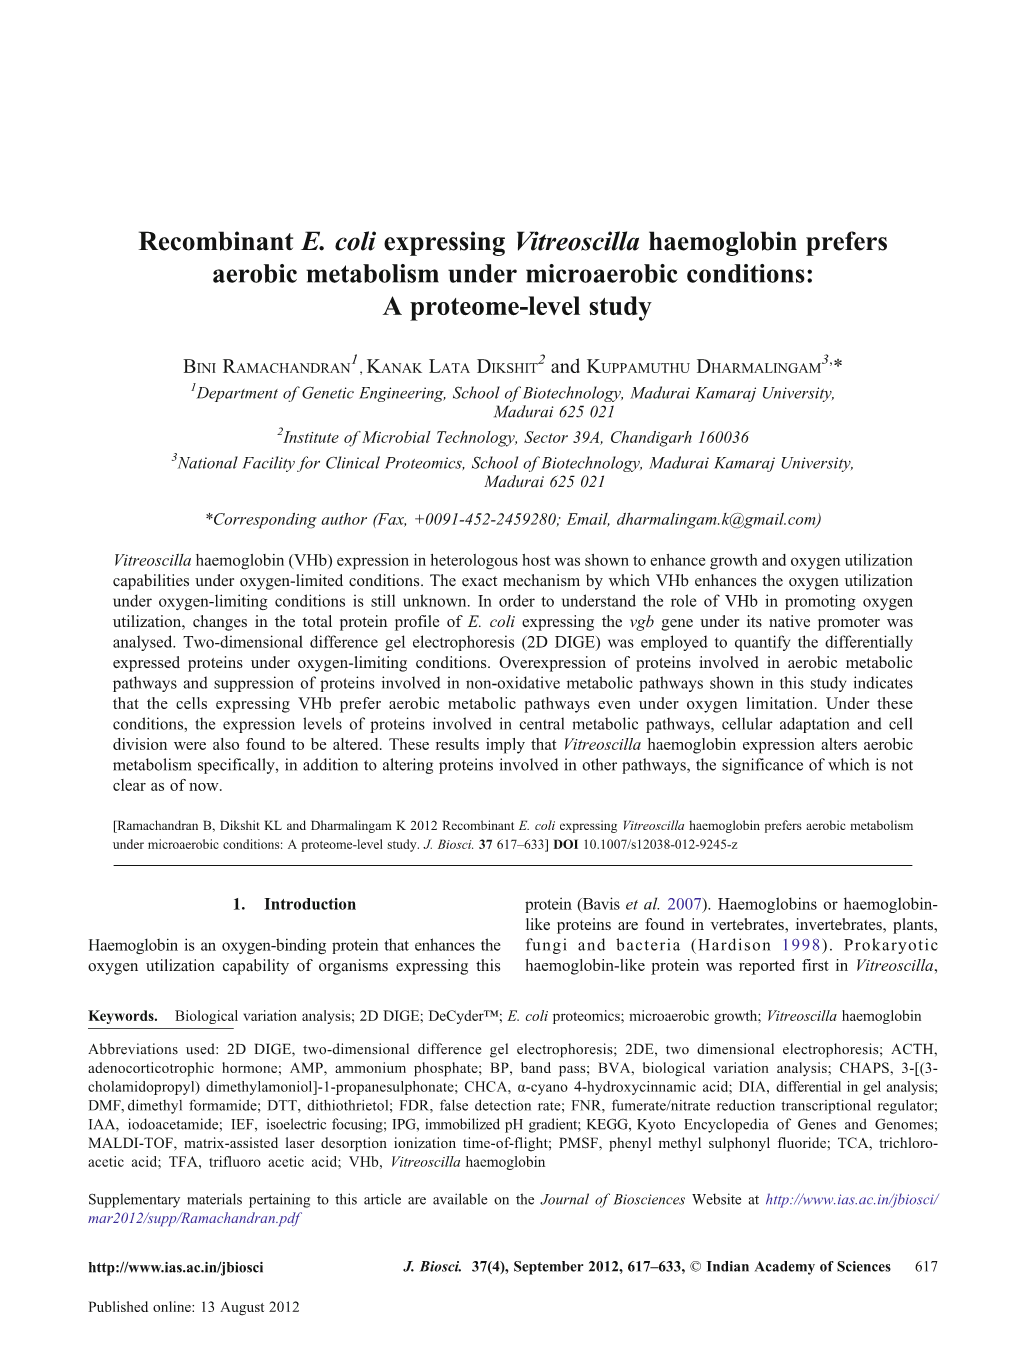 Recombinant E. Coli Expressing Vitreoscilla Haemoglobin Prefers Aerobic Metabolism Under Microaerobic Conditions: a Proteome-Level Study